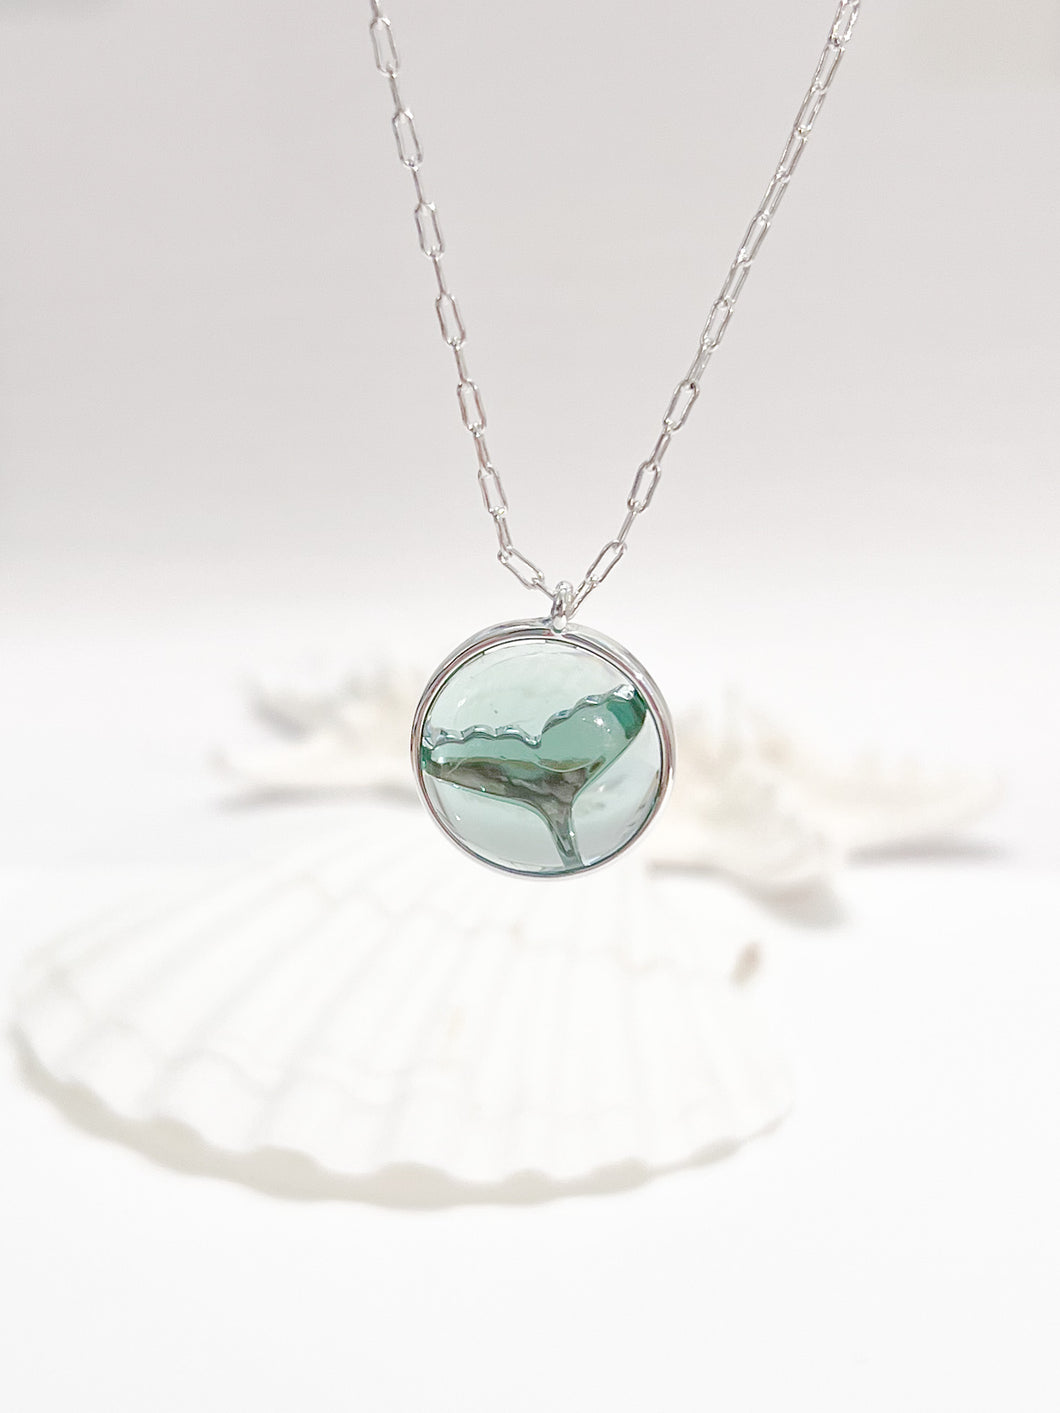 hyannis whale pendant necklace - silver